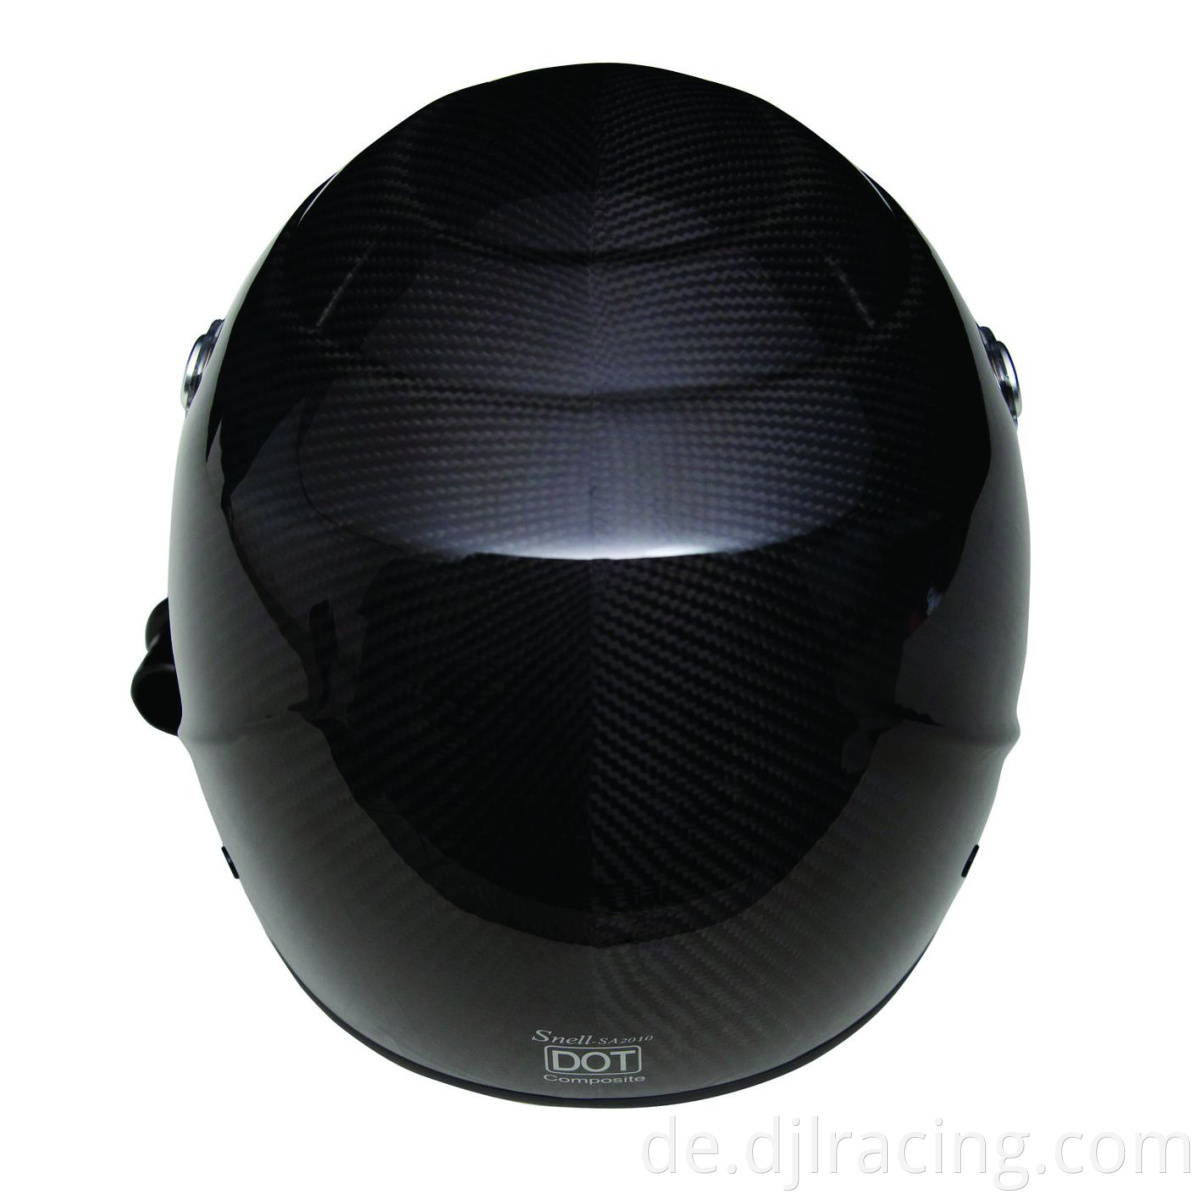 Großhandel China Handelssicherheit Helm / Motorradzubehör Motorrad-Rennhelme BF1-760 (Kohlefaser)